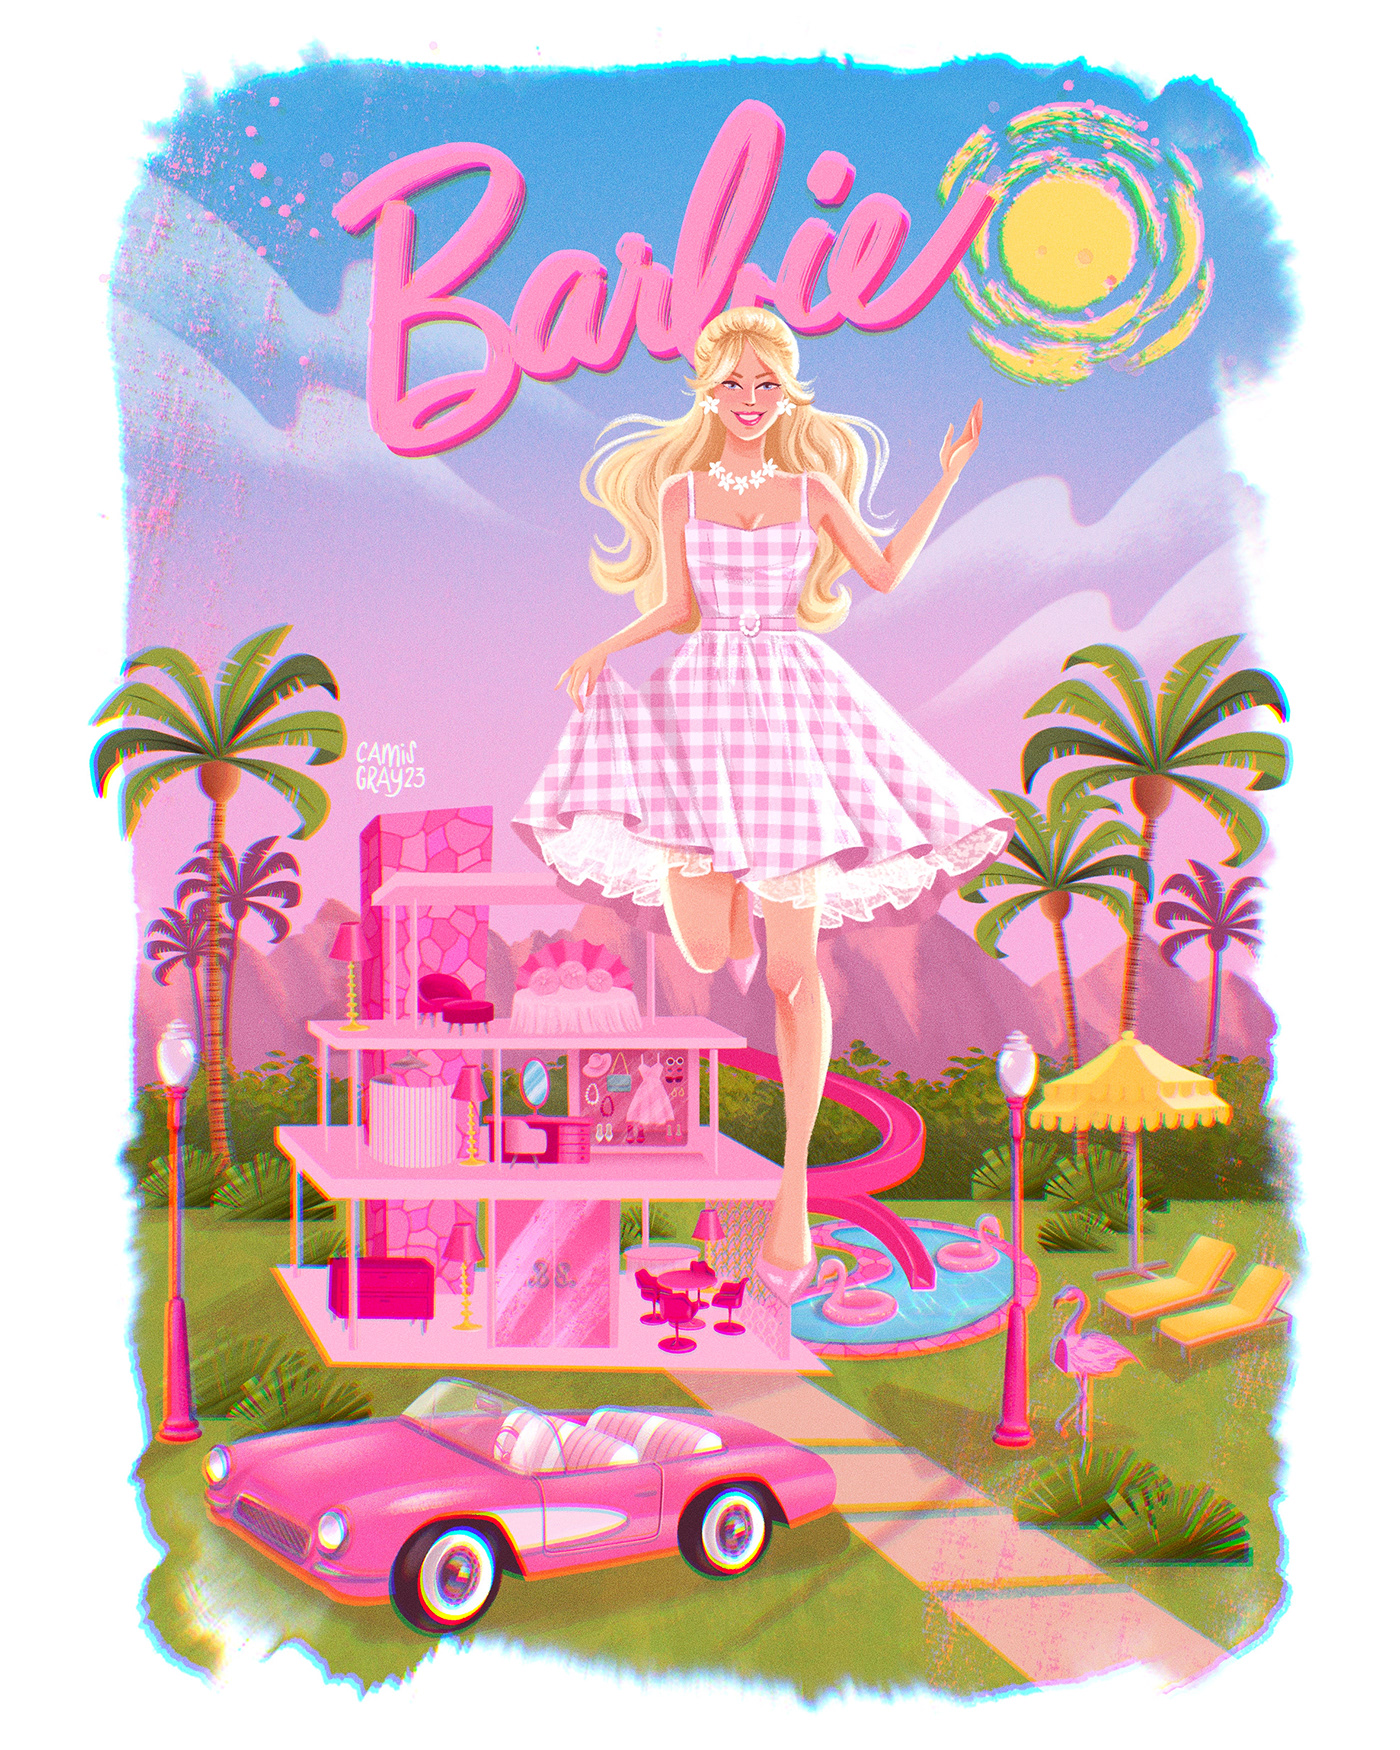 barbie movie Cinema movie poster concept art Procreate